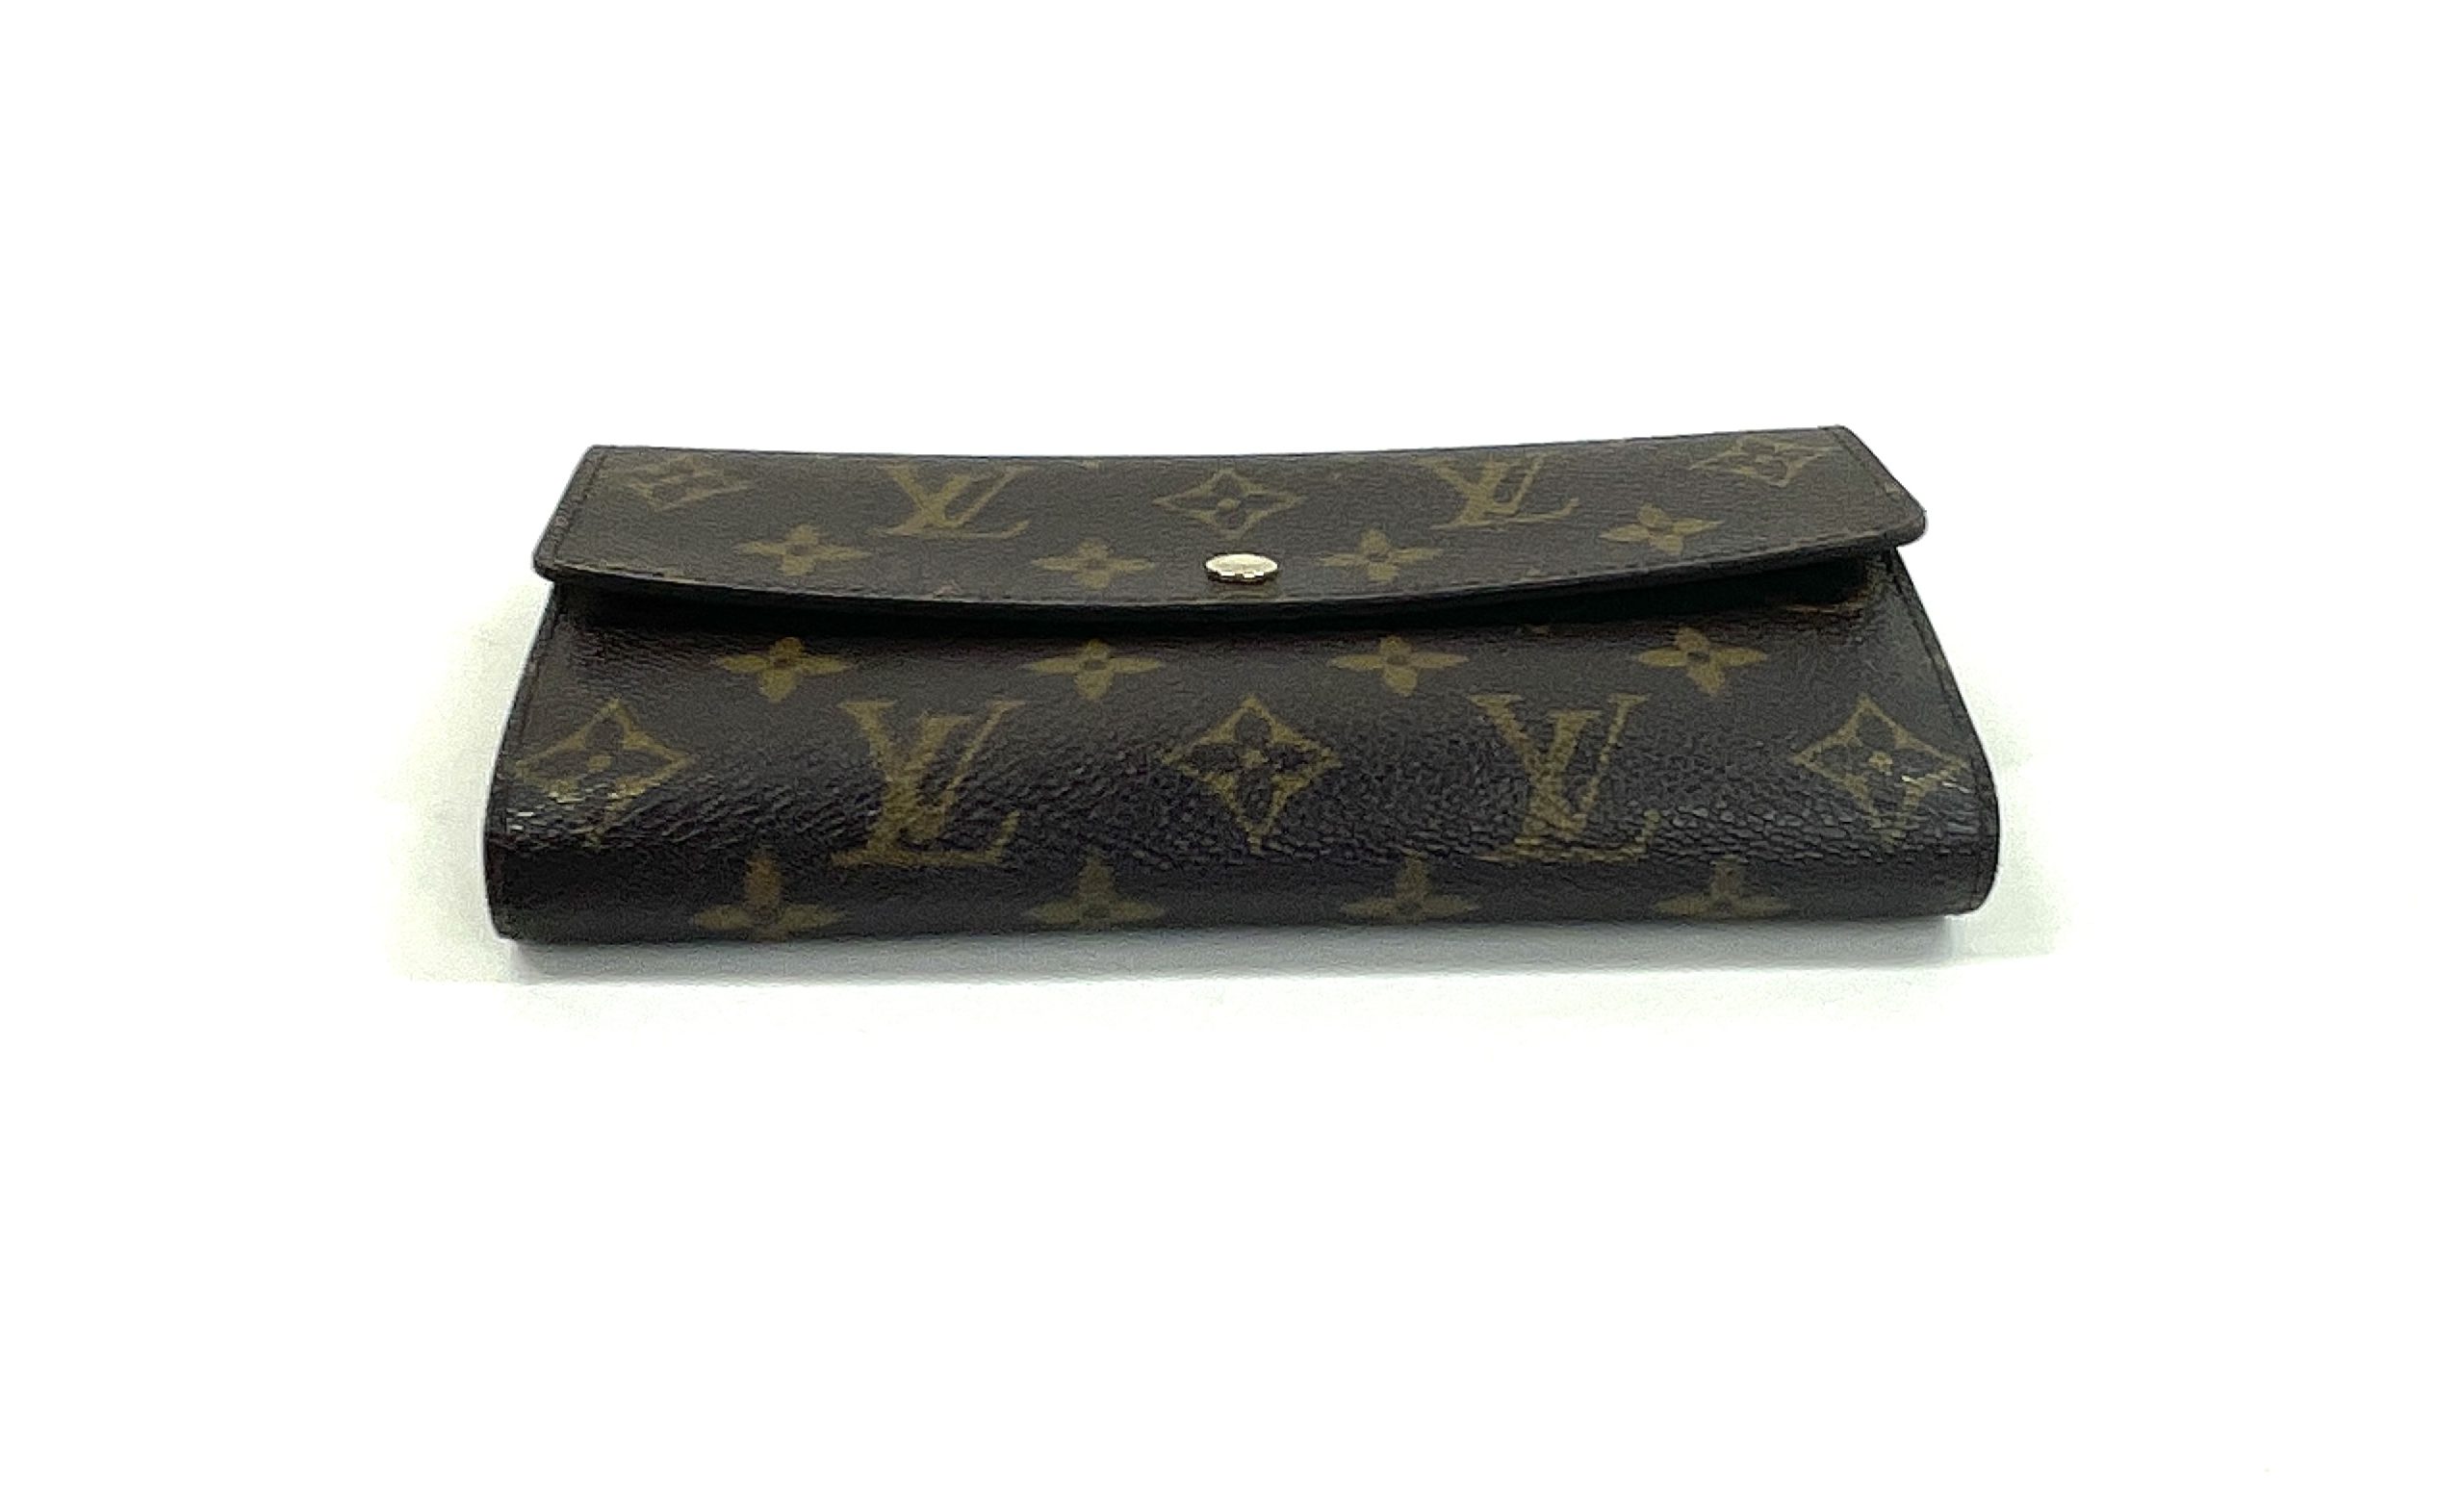 lv black monogram wallet